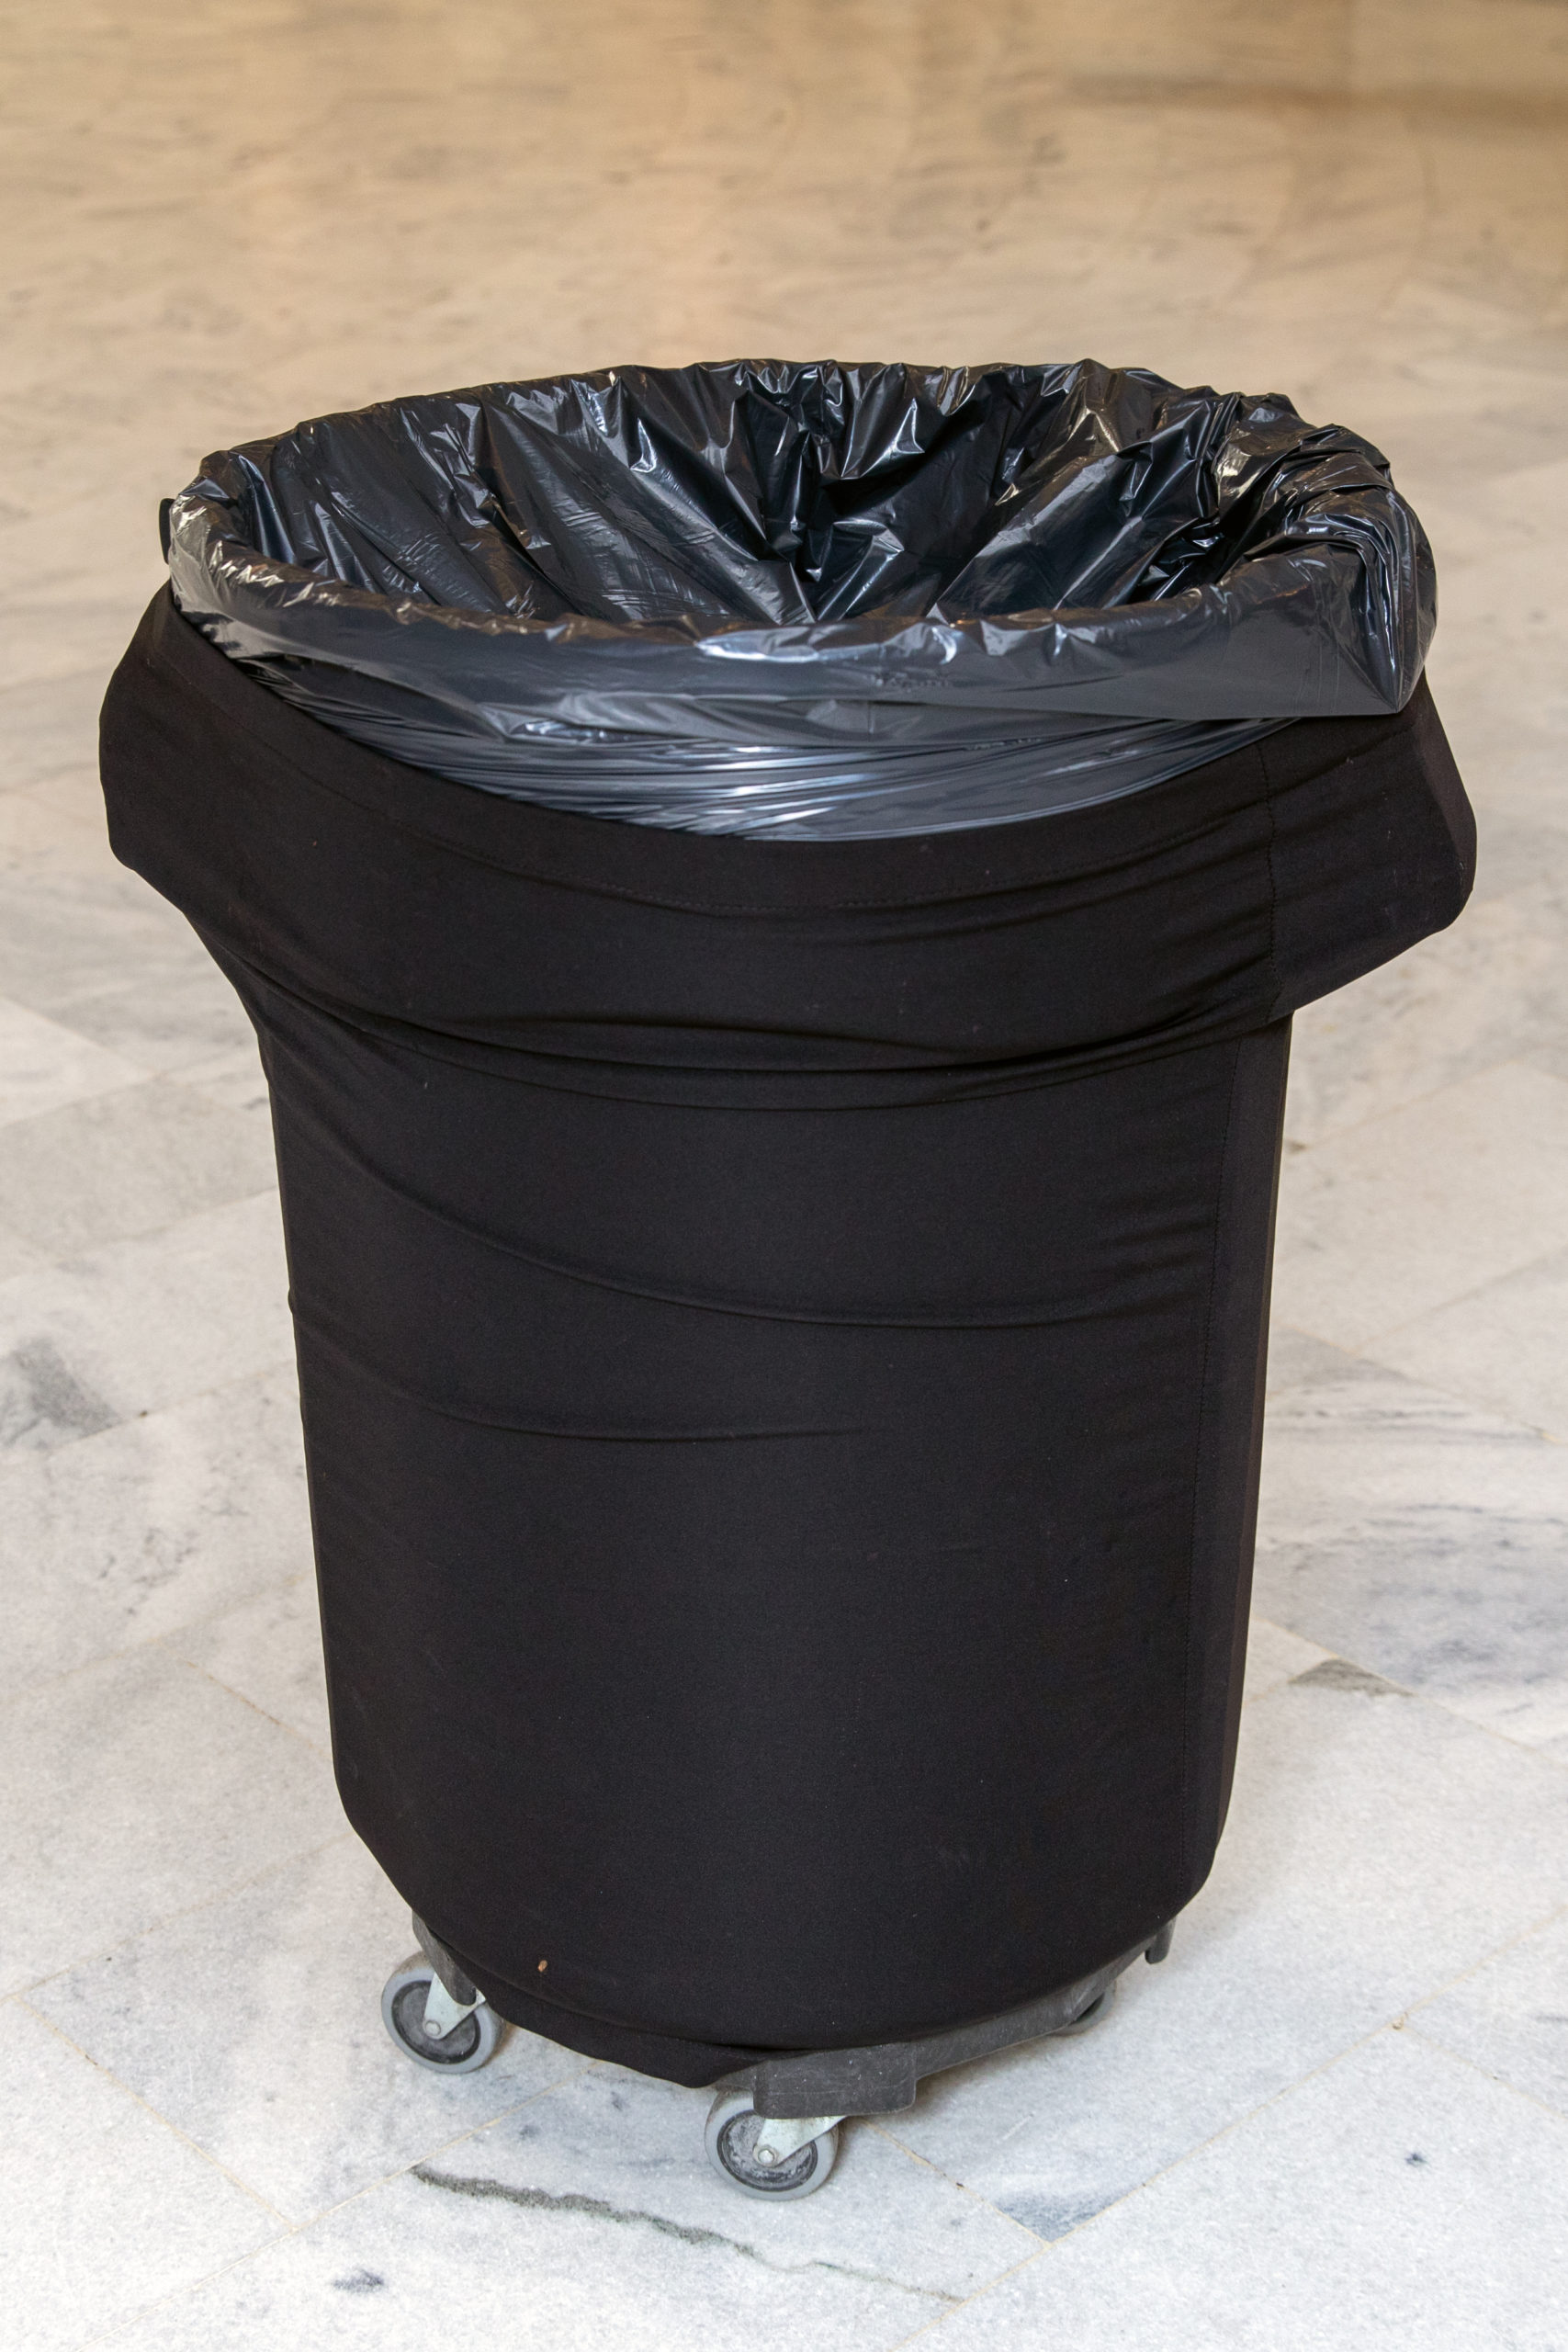 Black garbage can.